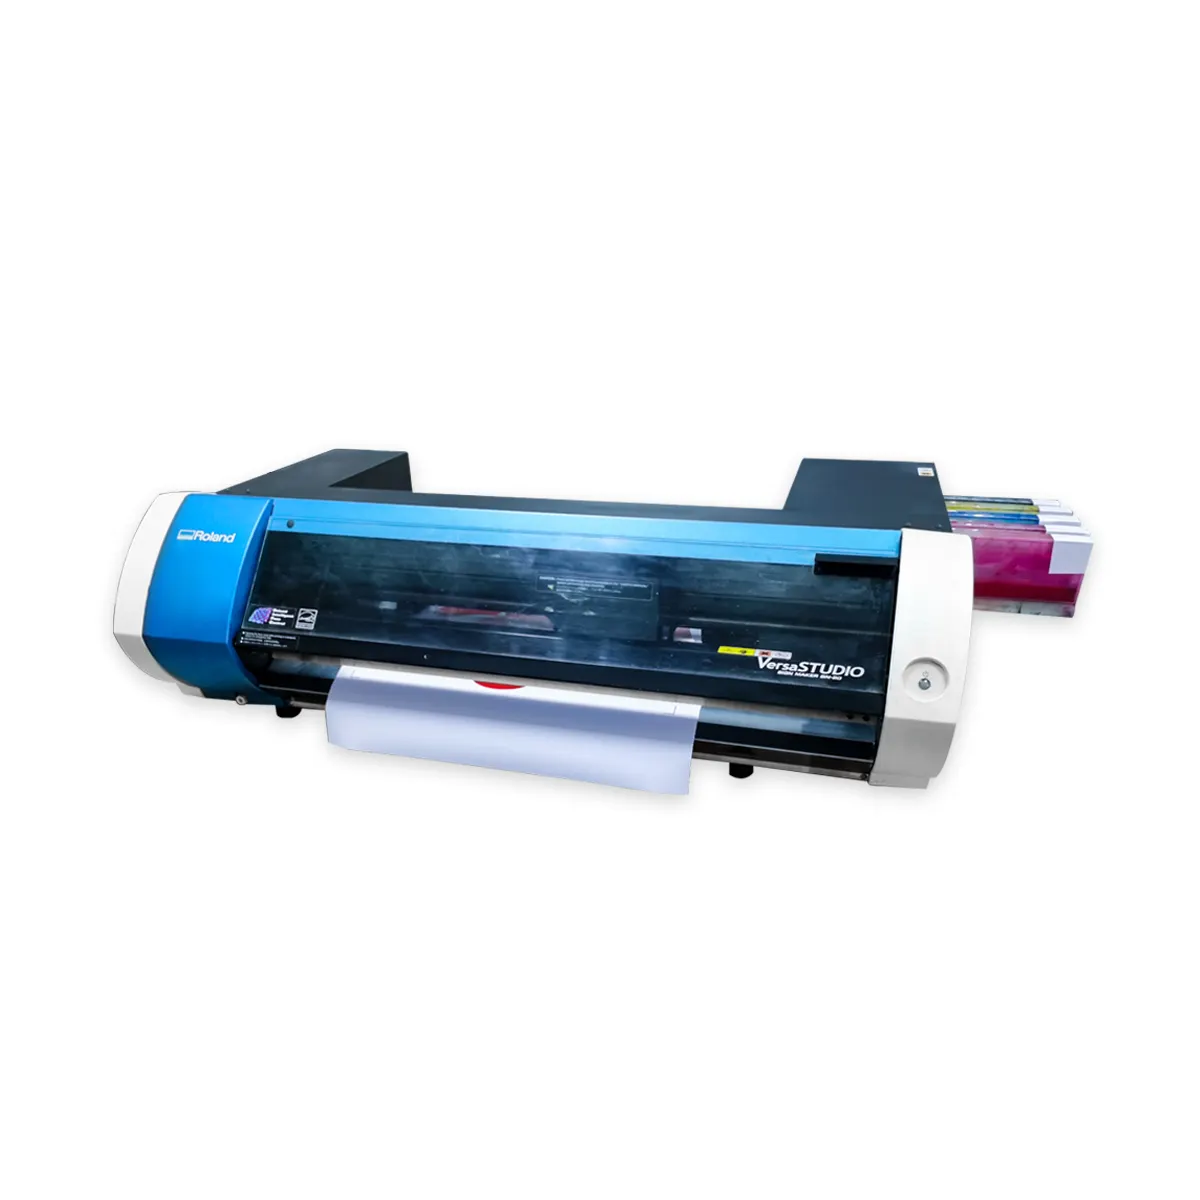 Used printing machine second hand roland-bn20 print and cut in one roland versastudio bn20 printer